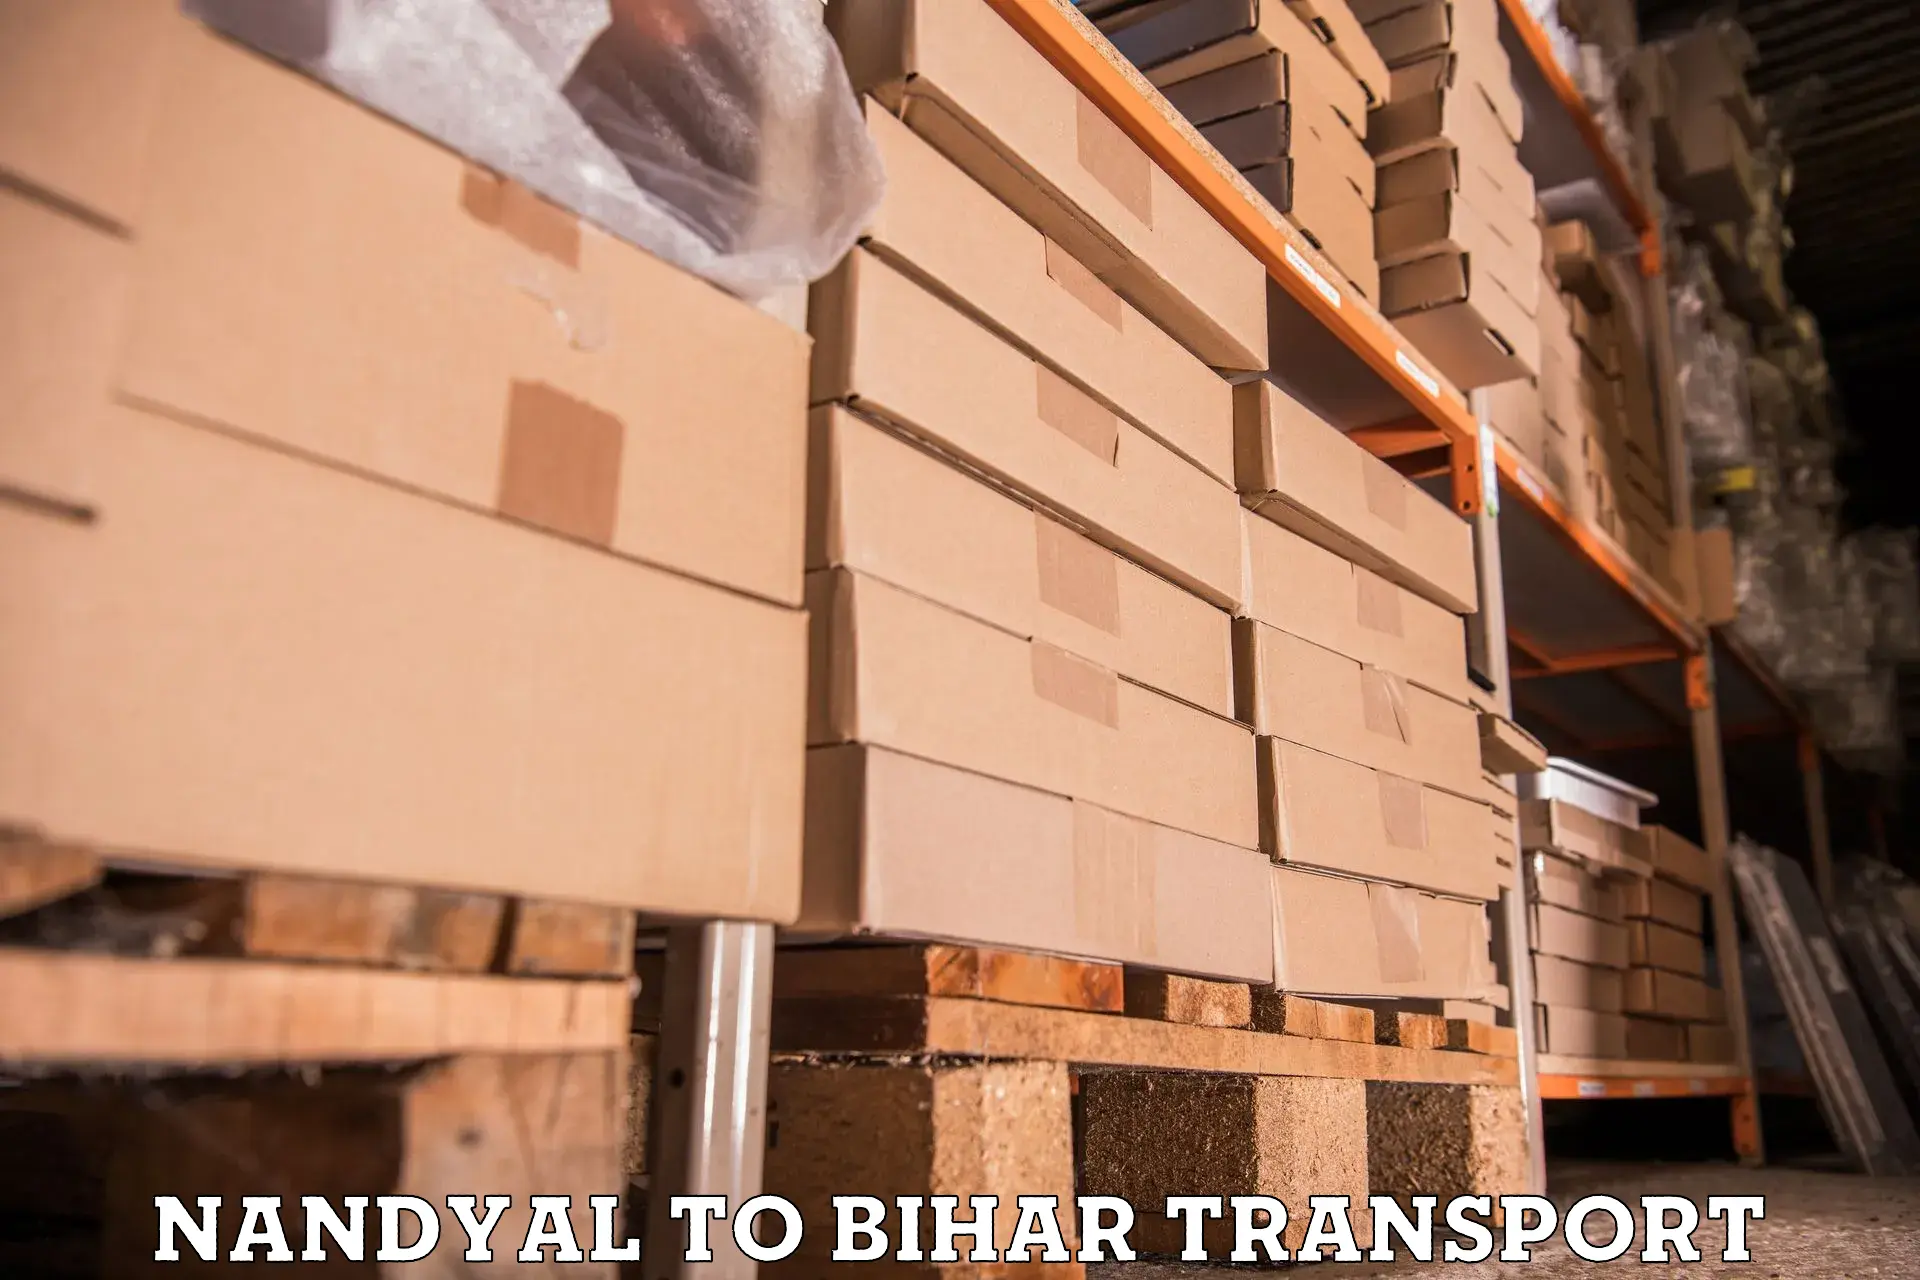 Nearby transport service Nandyal to Bharwara